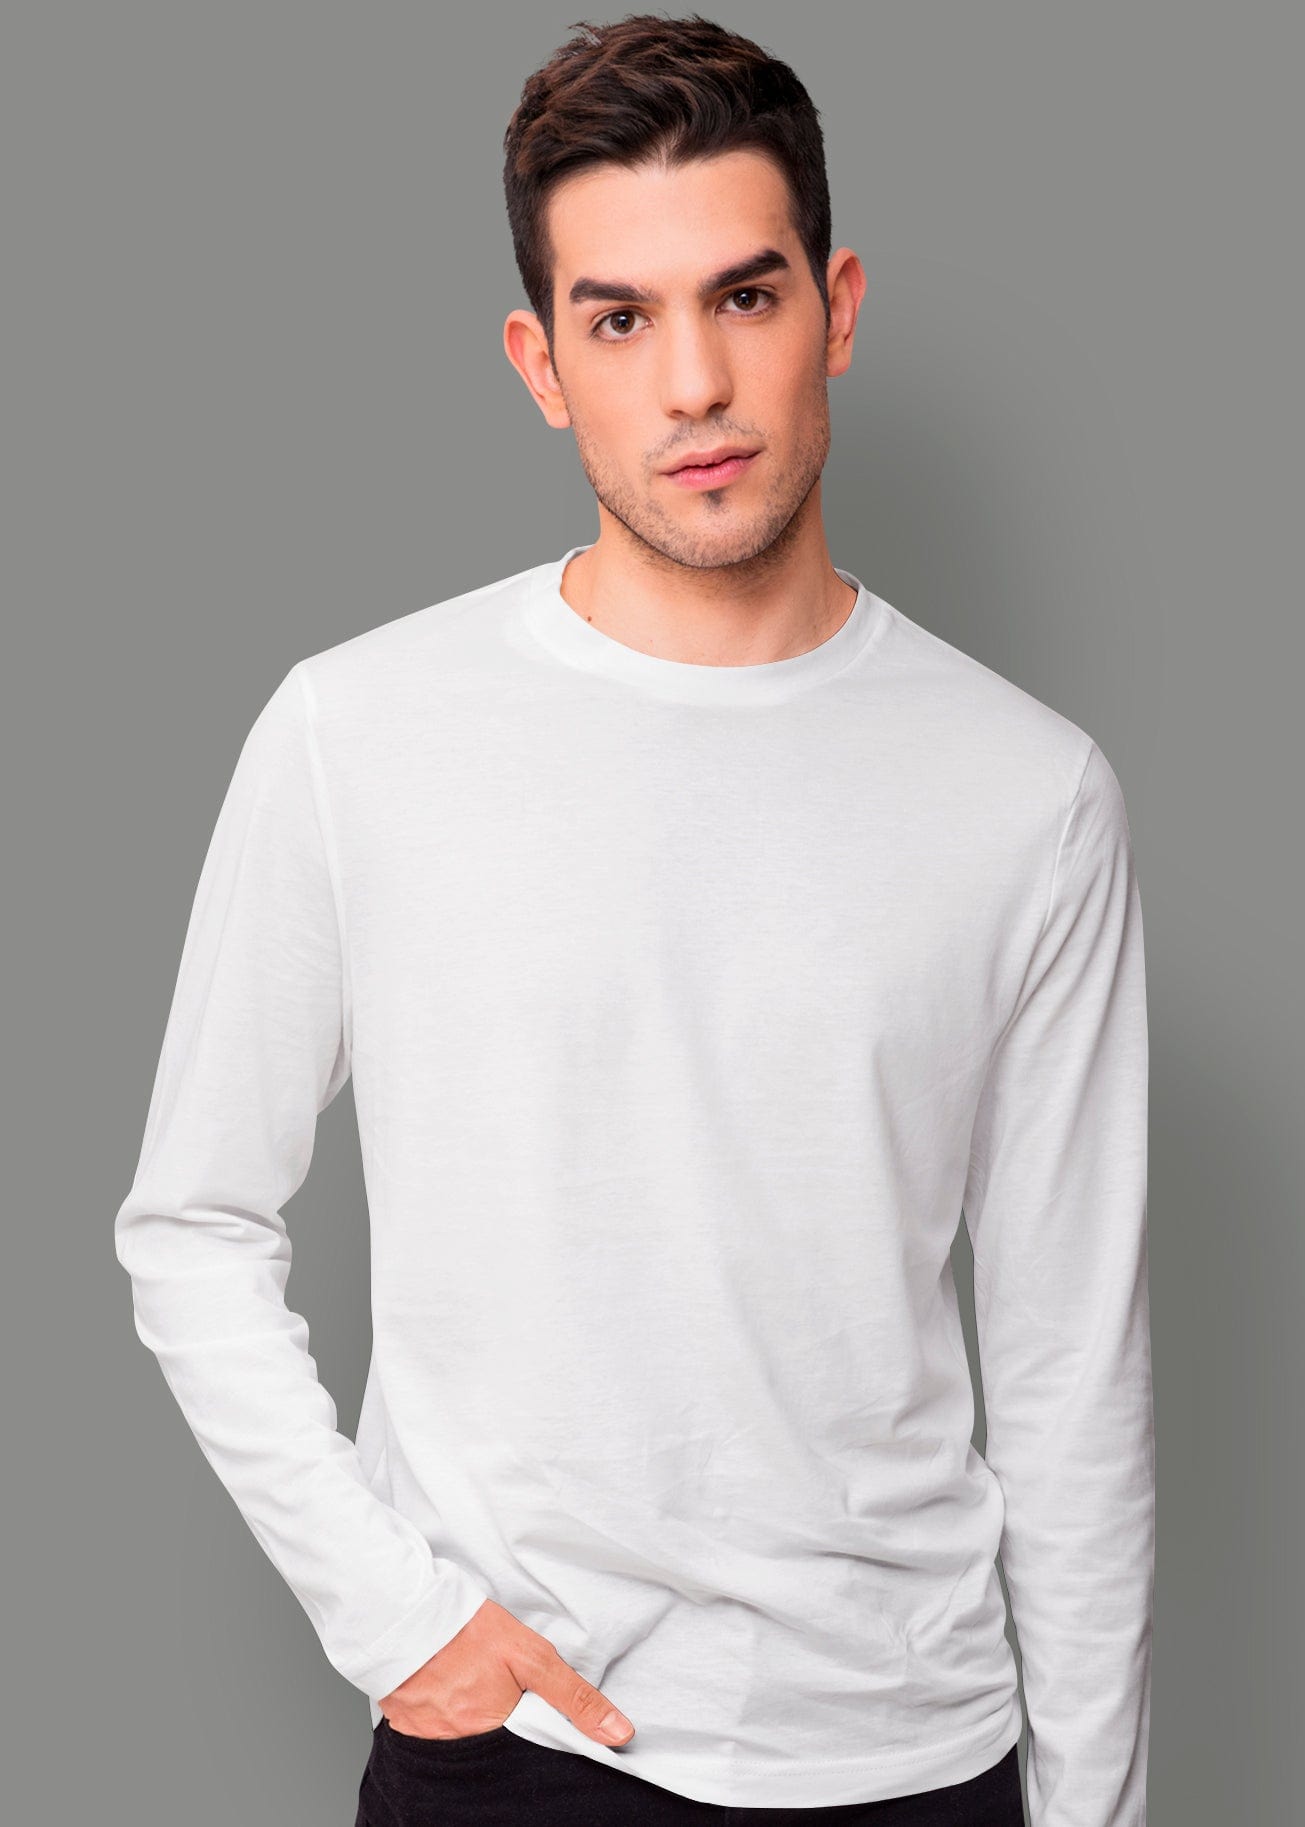 Solid Full Sleeve Premium Cotton T-Shirt For Men - Pack Of 2